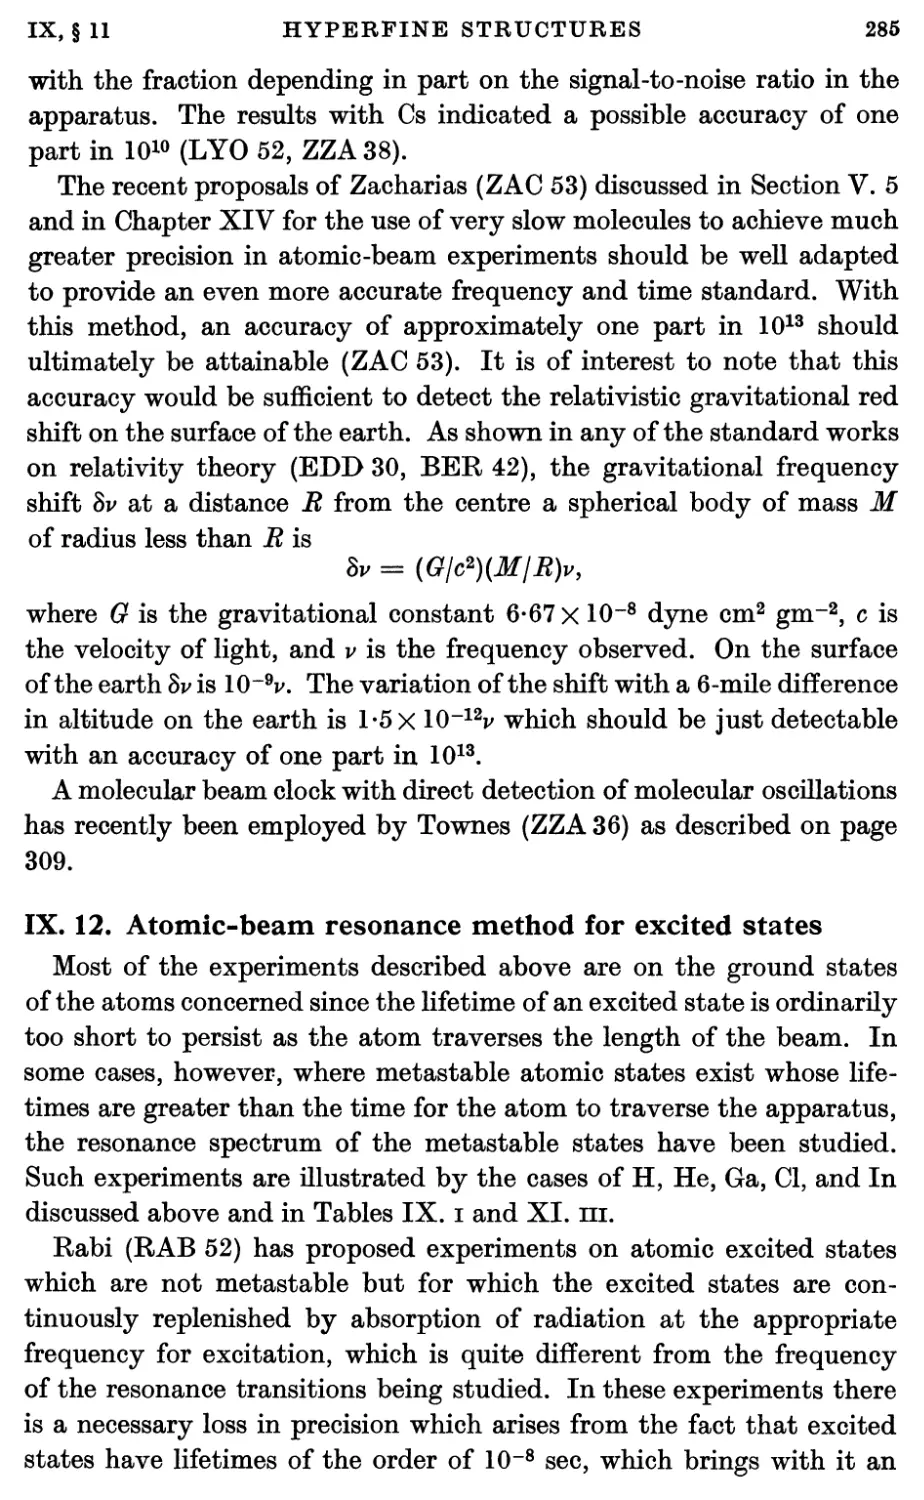 IX.12. Atomic-beam Resonance Method for Excited States